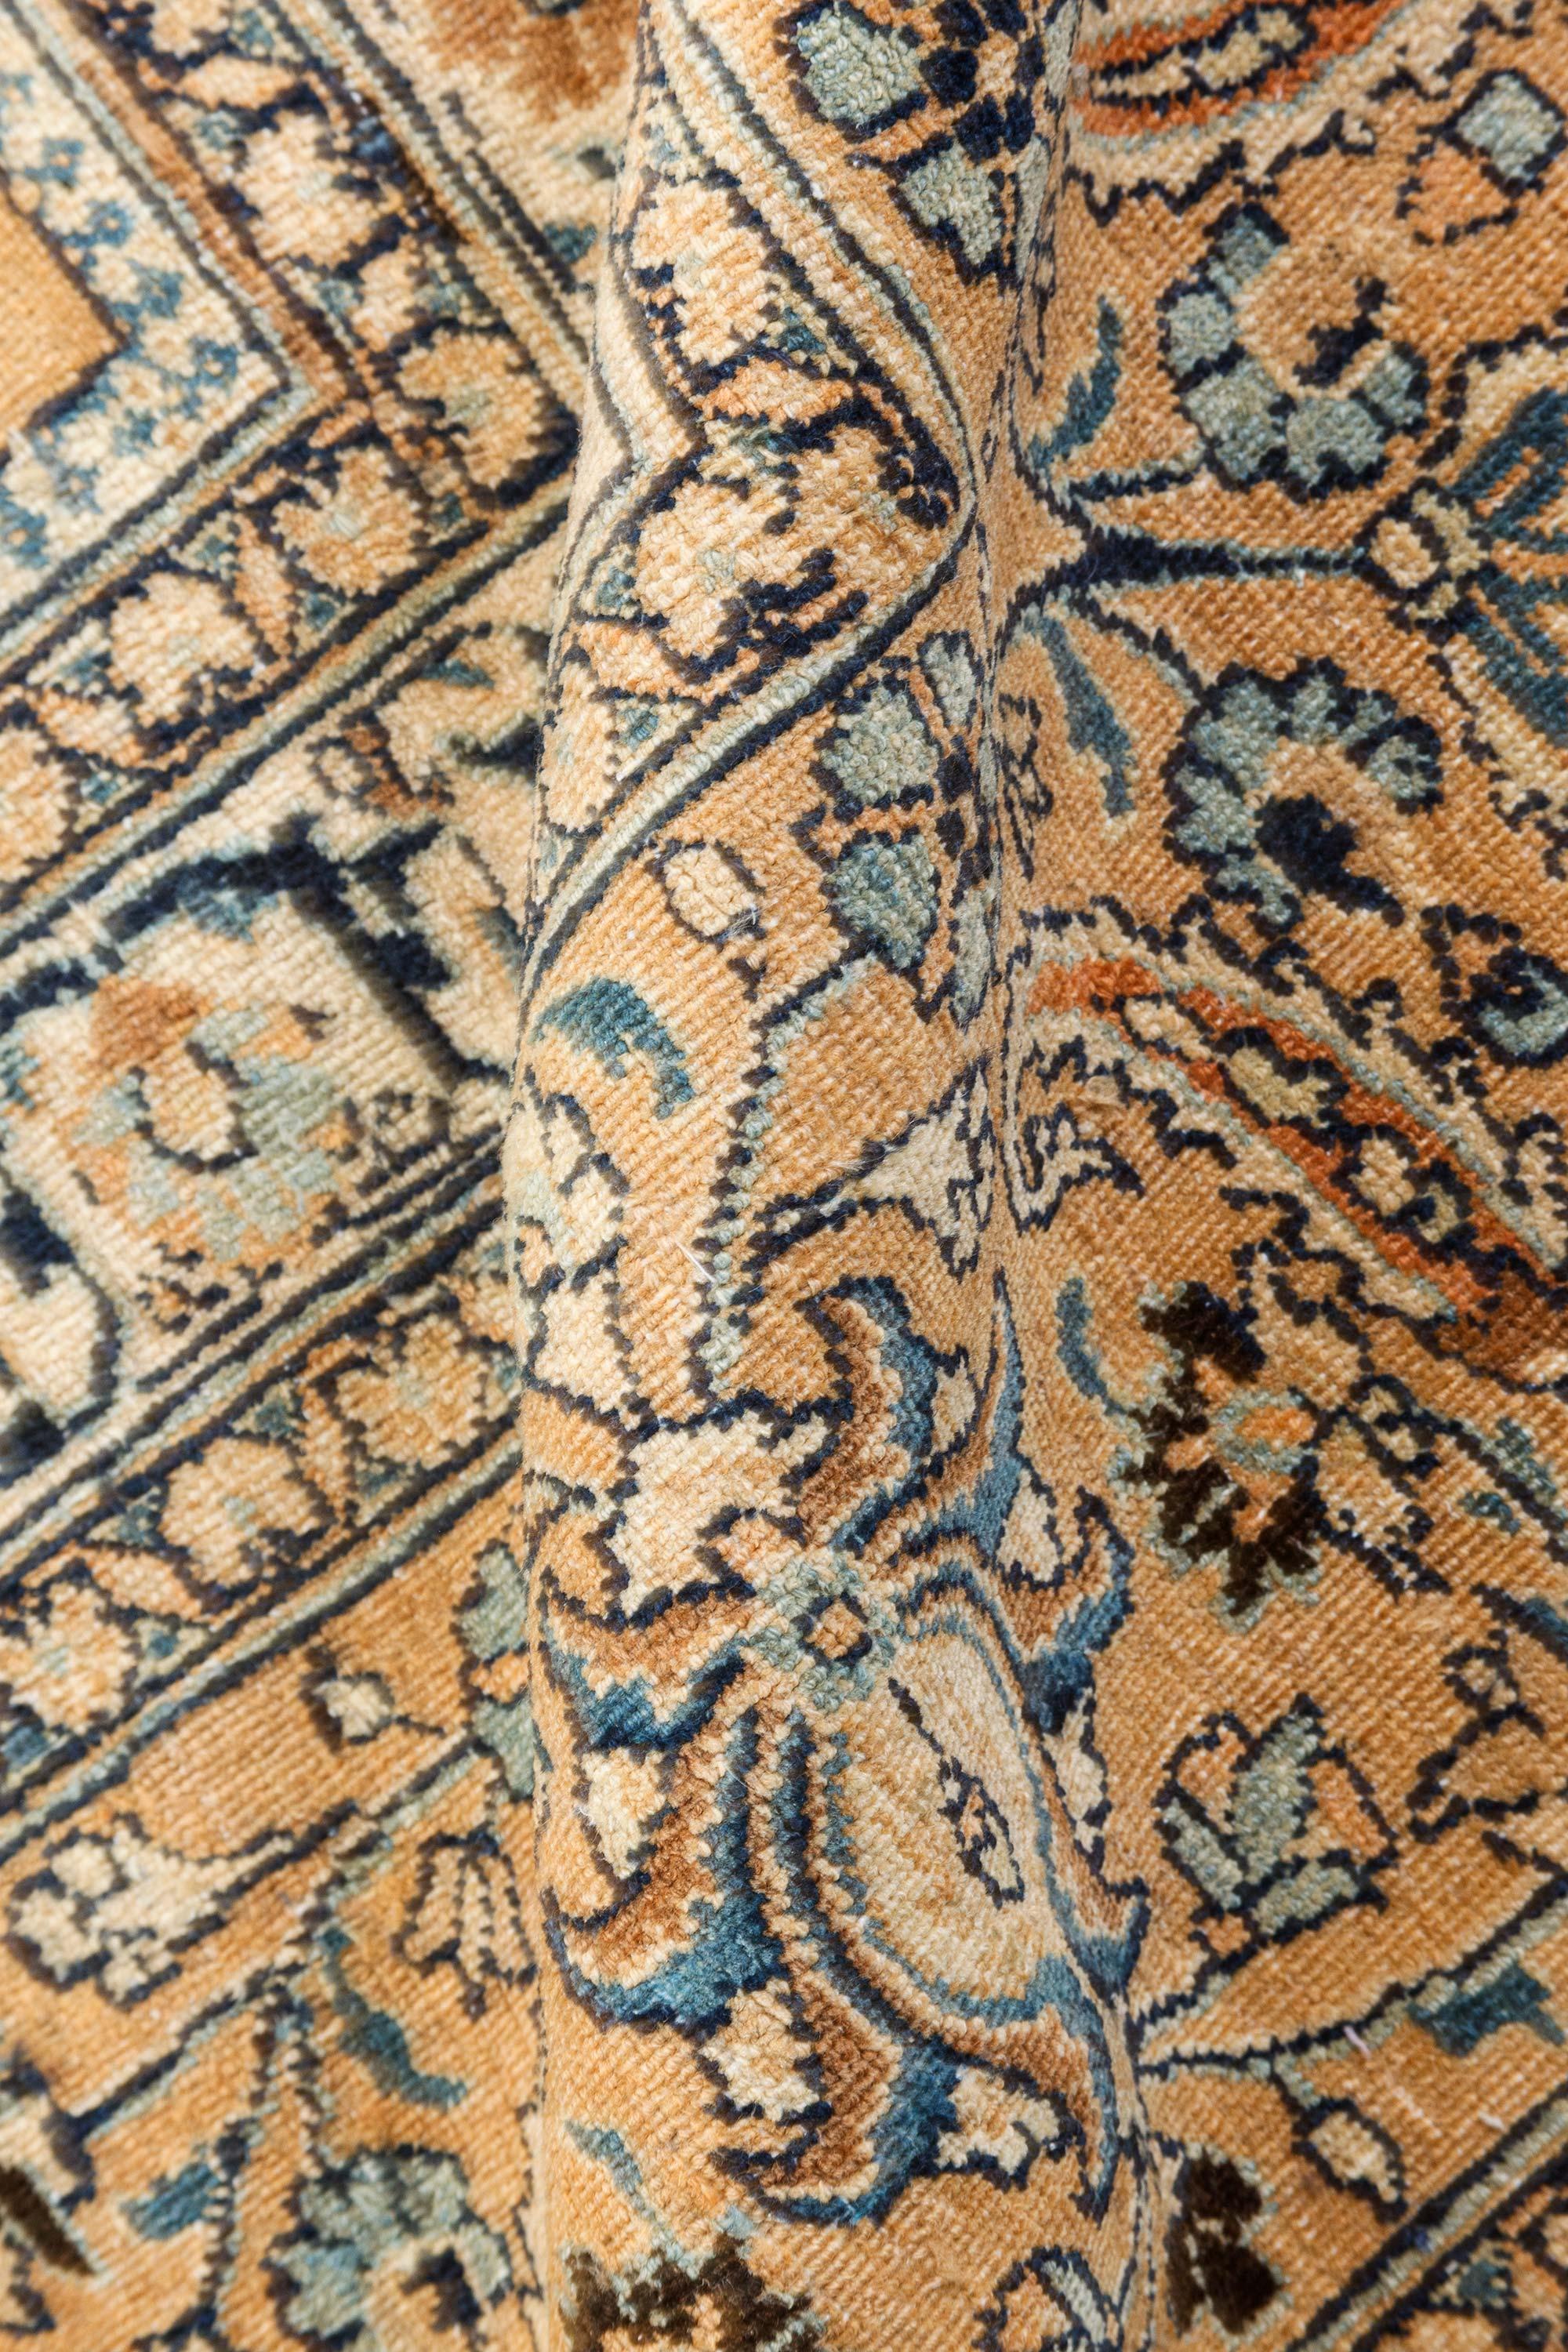 Antique Persian Meshad Botanic Handmade Wool Carpet.
Size: 13'9